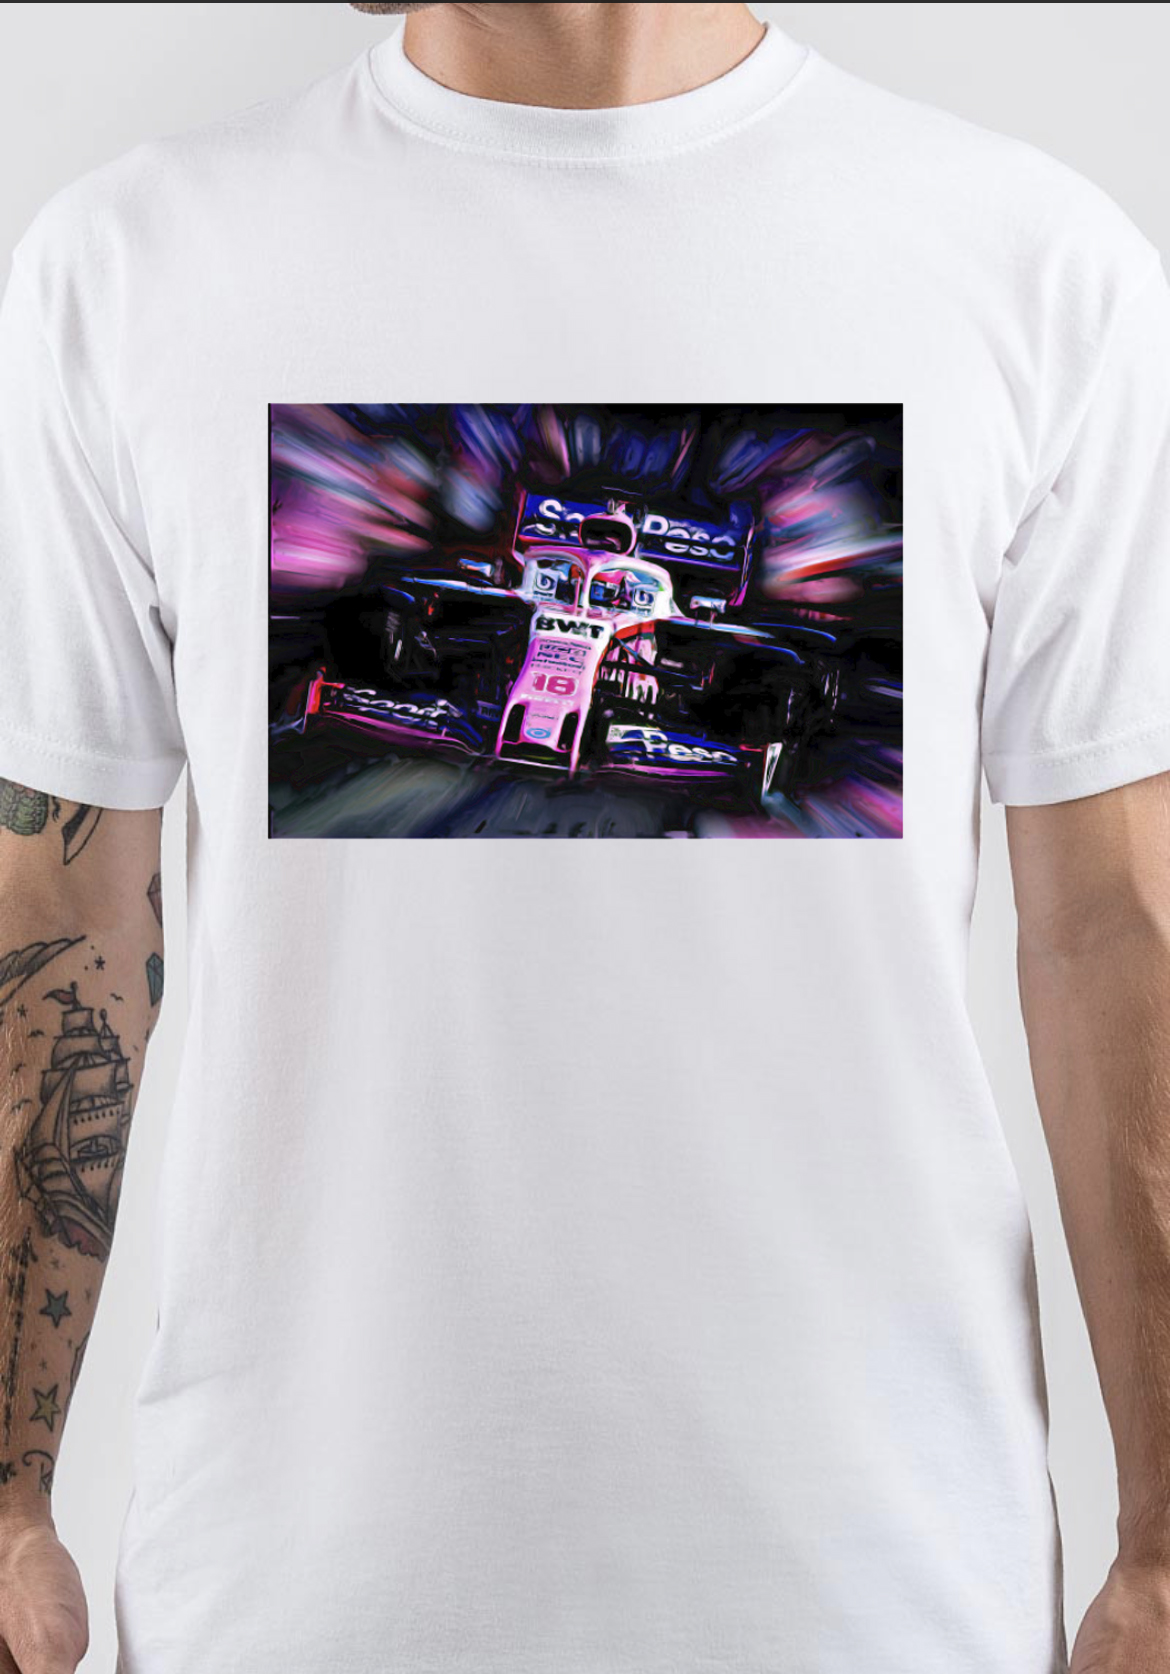 Lance Stroll T-Shirt And Merchandise